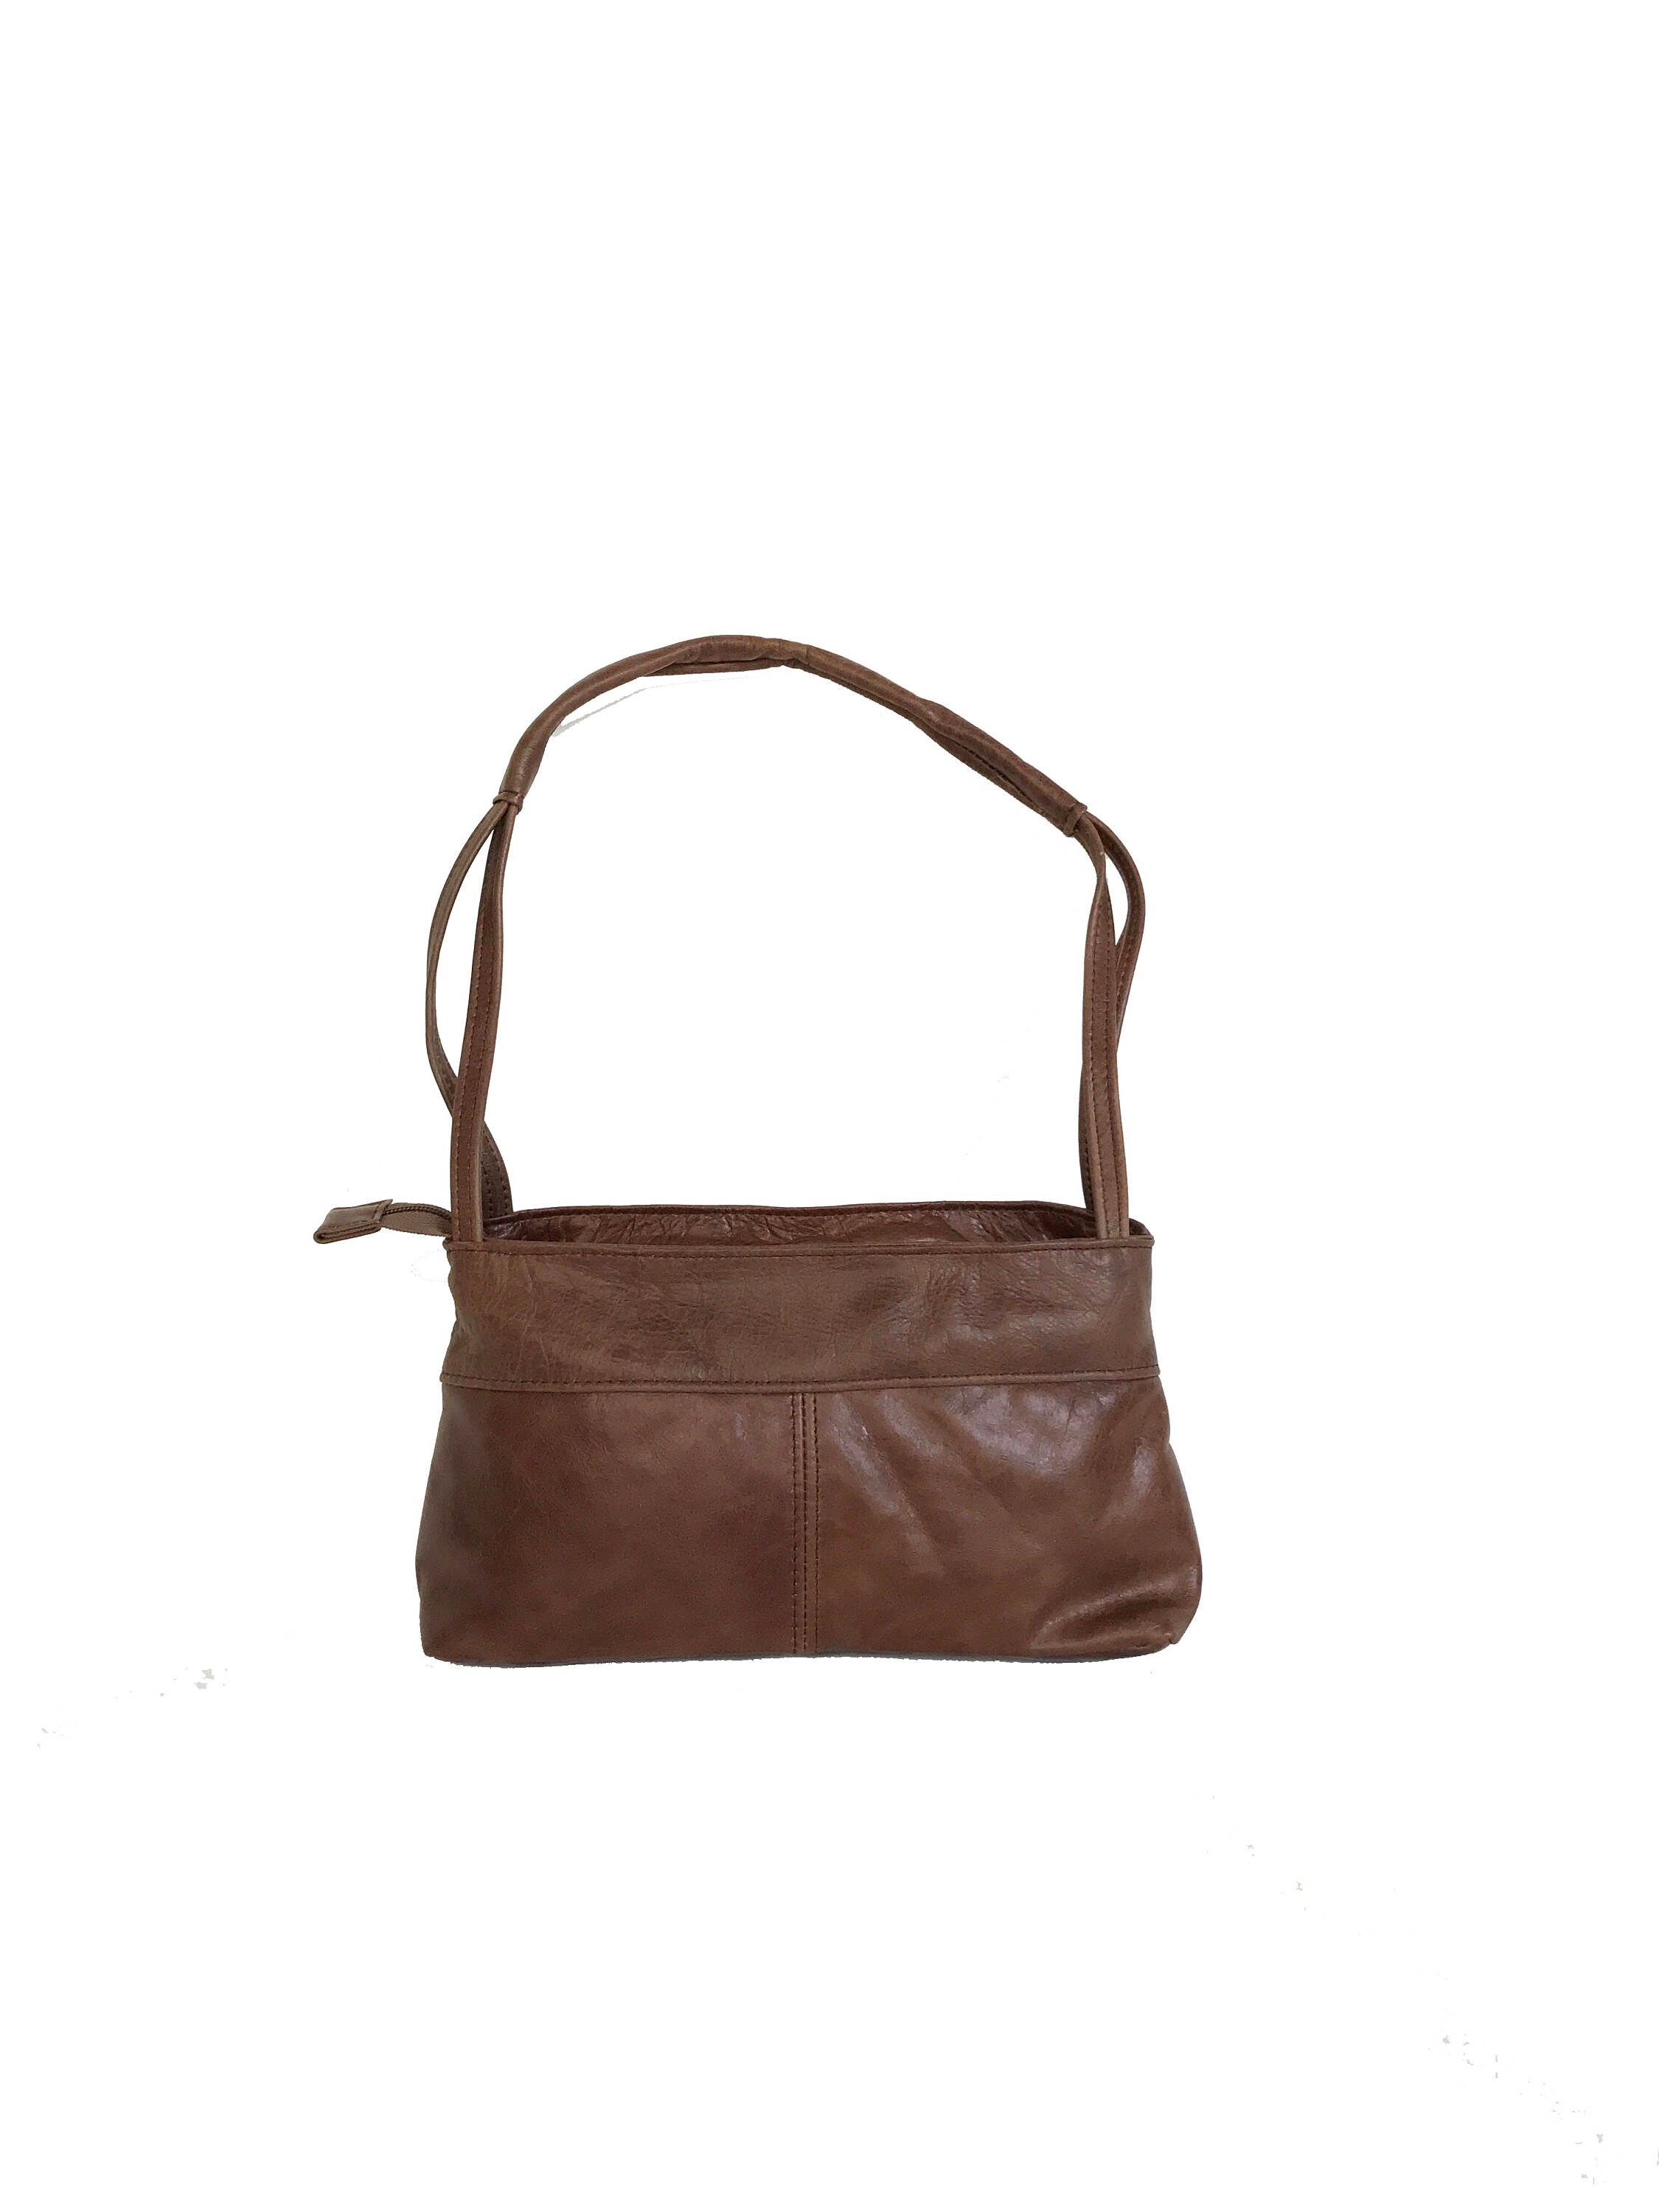 Distressed Leather Bag Purse Small Everyday Shoulder Handbag